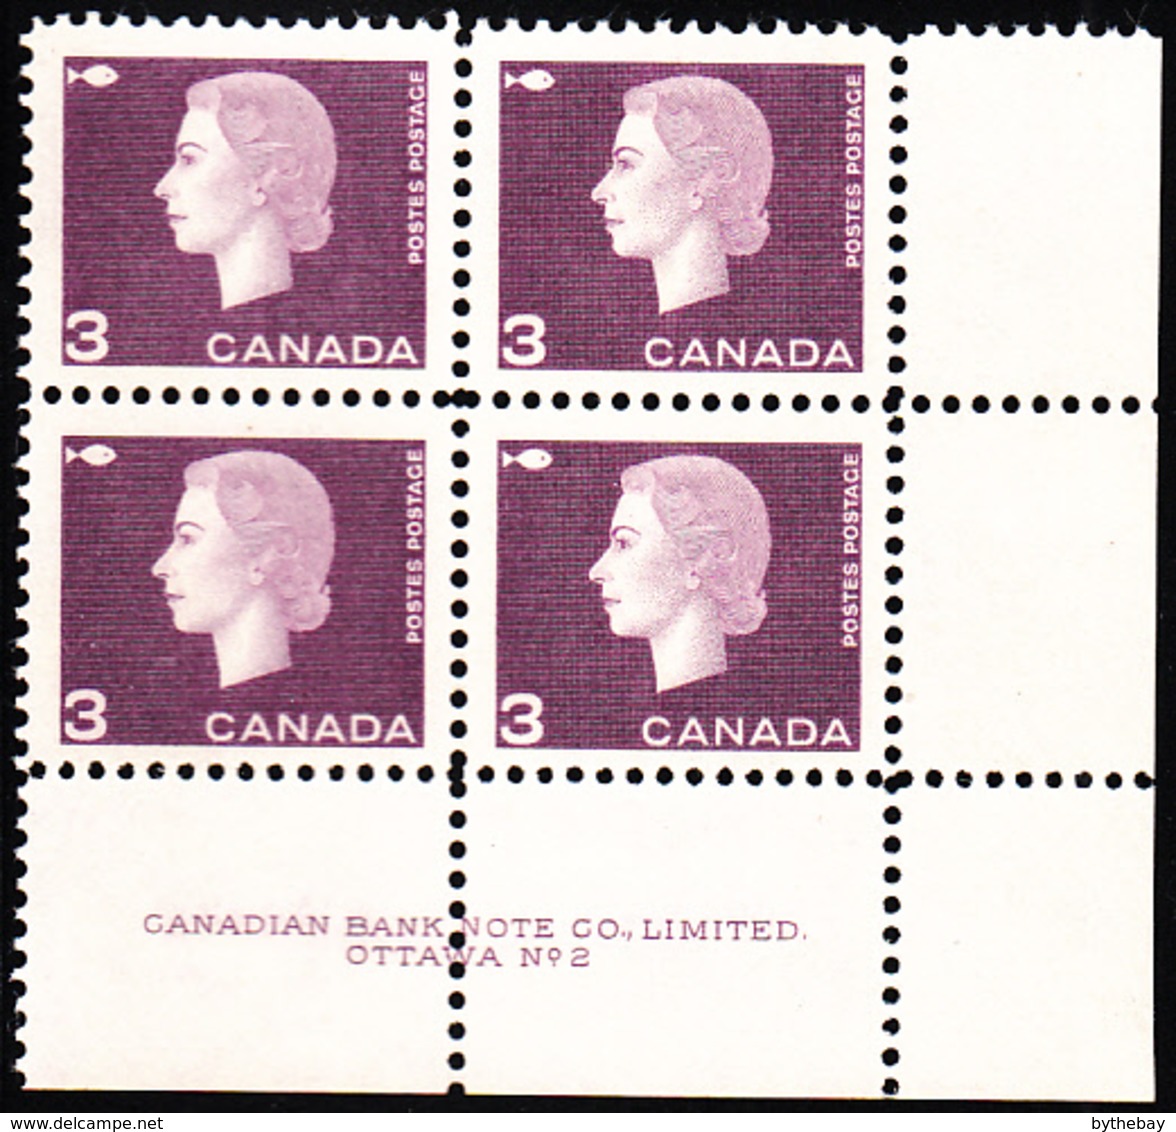 Canada 1963 MNH Sc #403 3c QEII Cameo Purple Plate #2 LR - Num. Planches & Inscriptions Marge